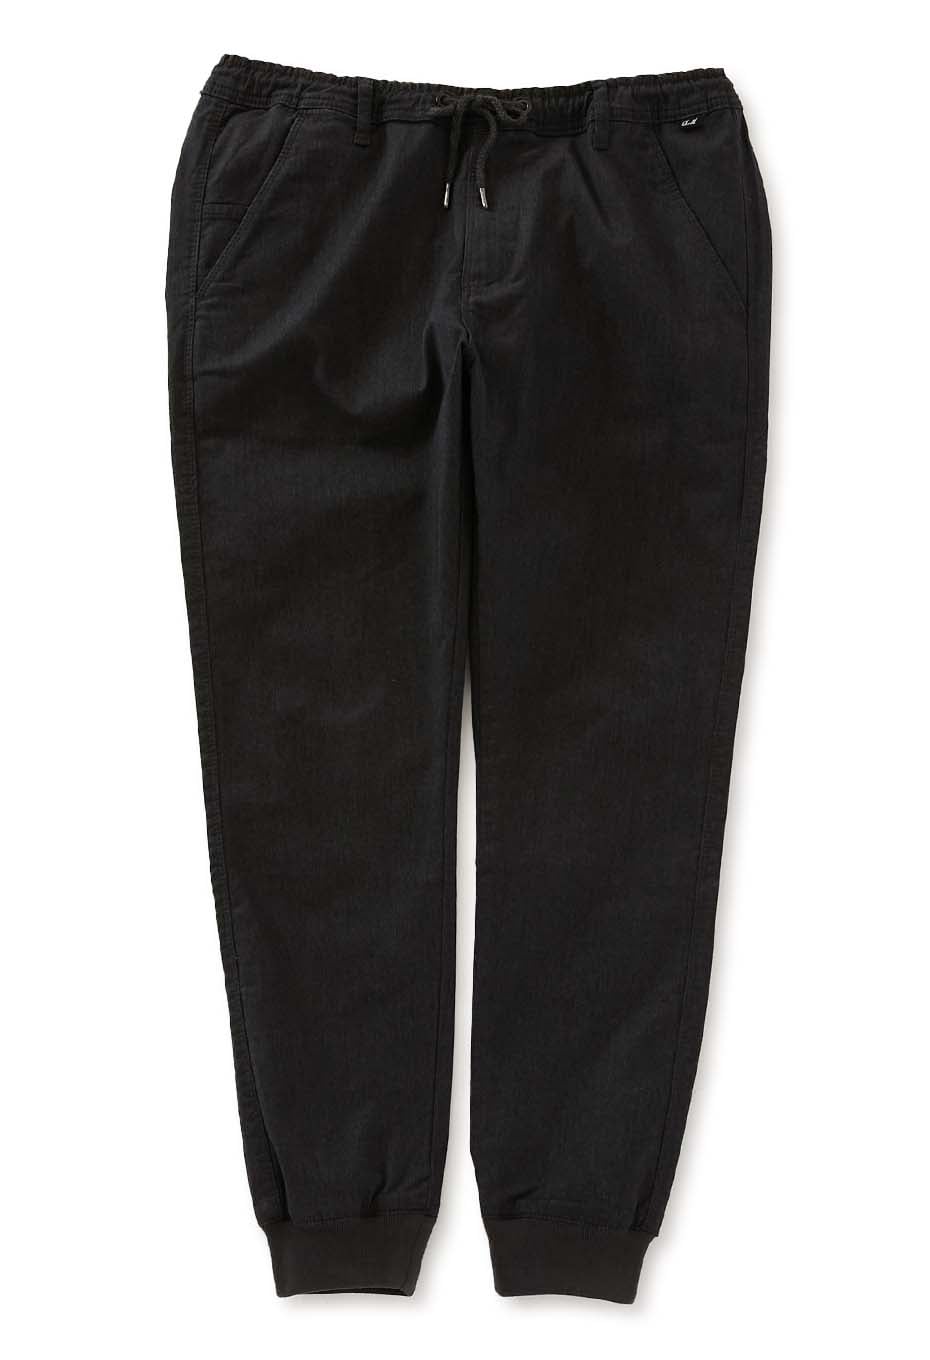 REELL Reflex Rib Pants / Premium Dark Gray